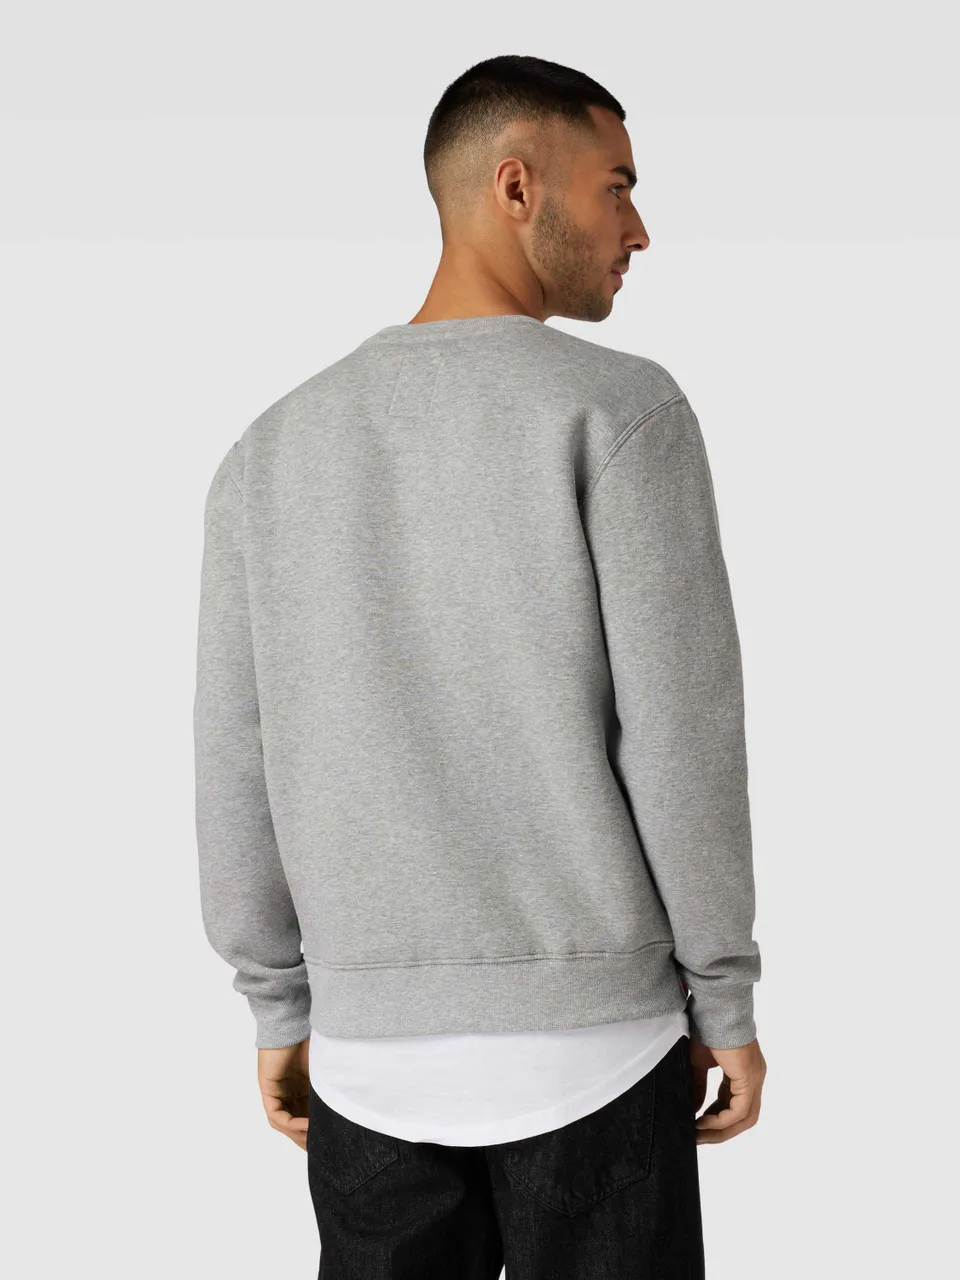 Sweatshirt mit Label-Print Modell 'BASIC'